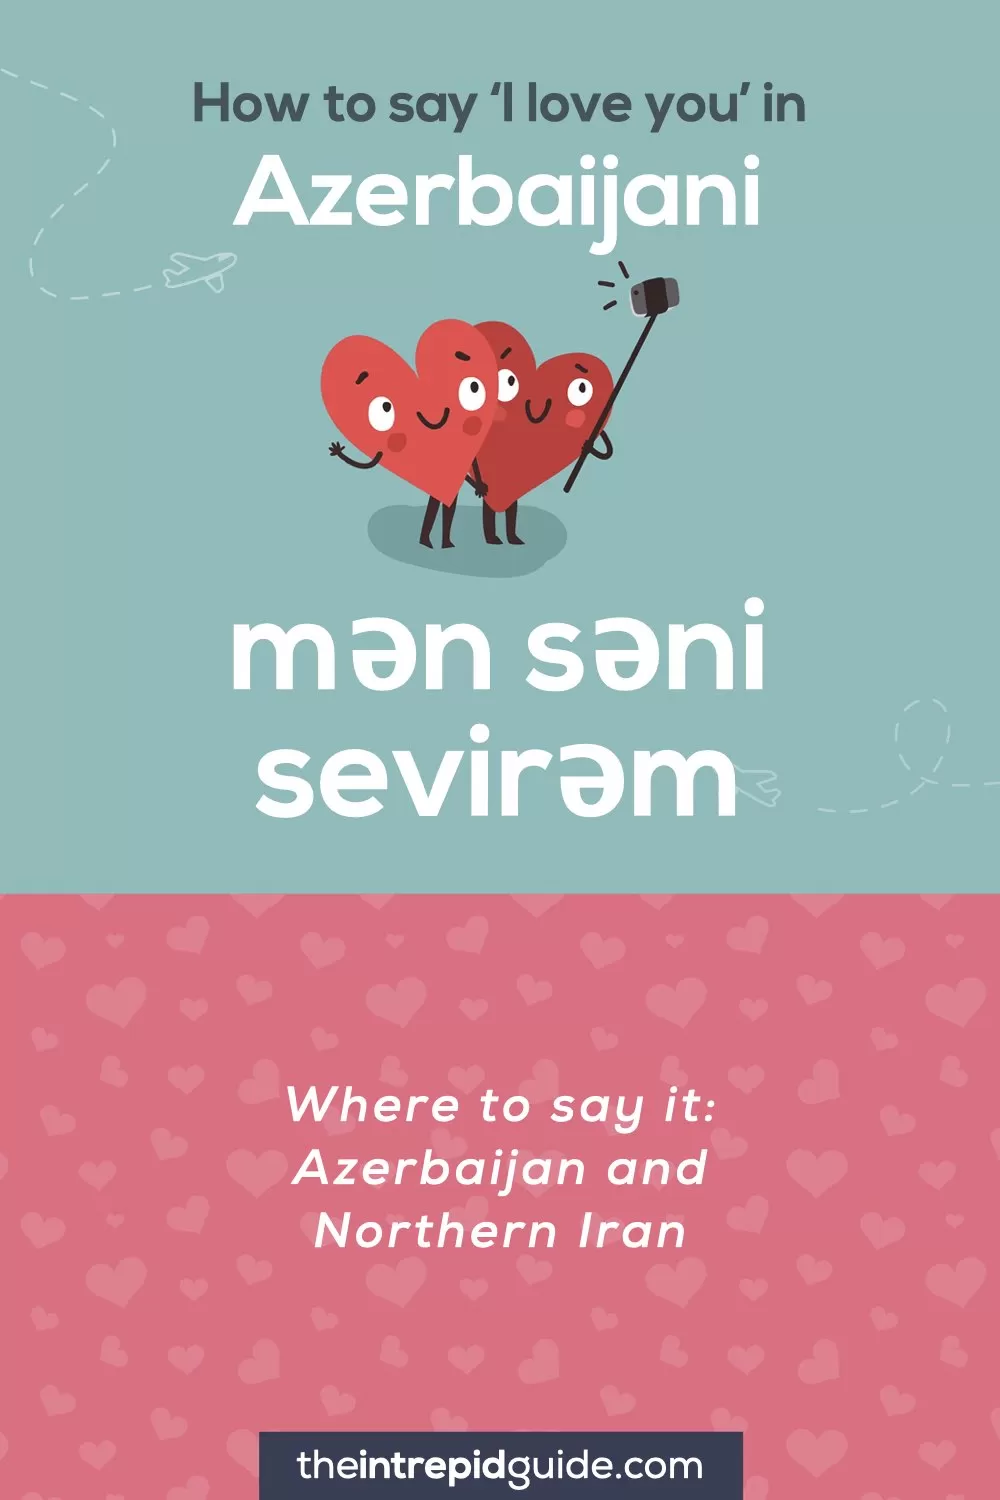 How to say I love you in different languages - Azerbaijani - mən səni sevirəm